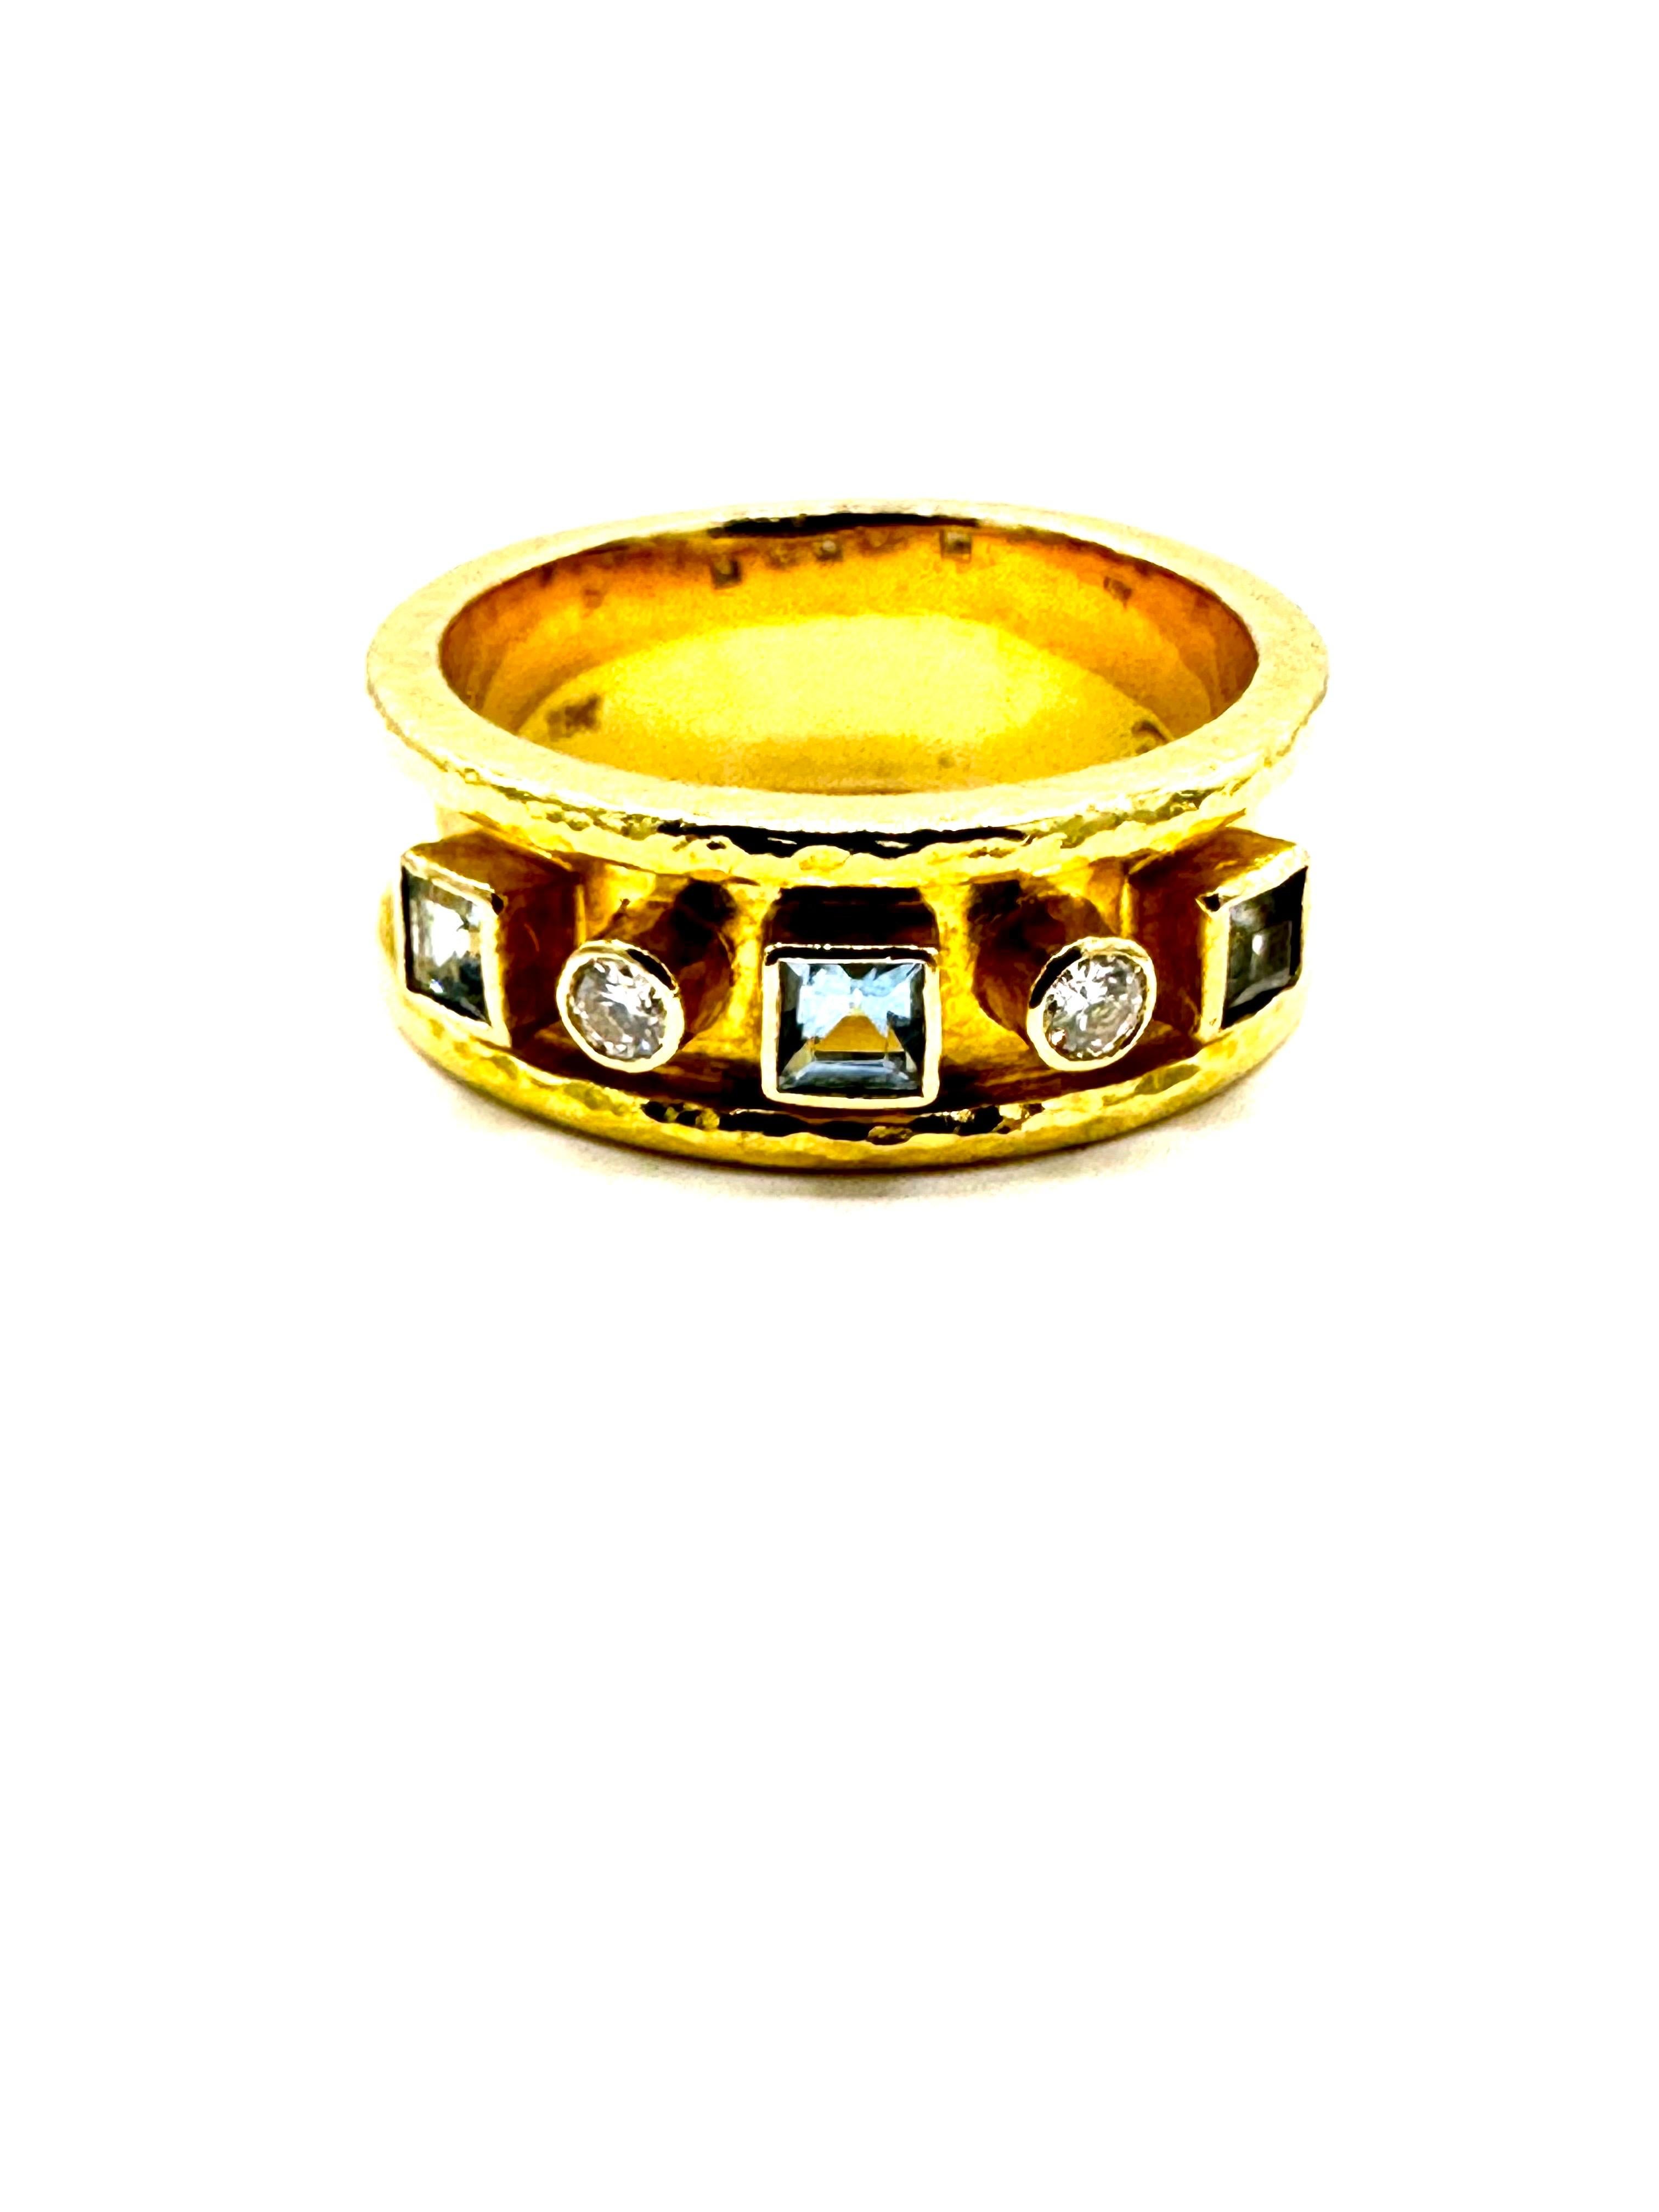 Retro Elizabeth Locke Aquamarine and Diamond 19K Textured Yellow Gold Band Ring For Sale